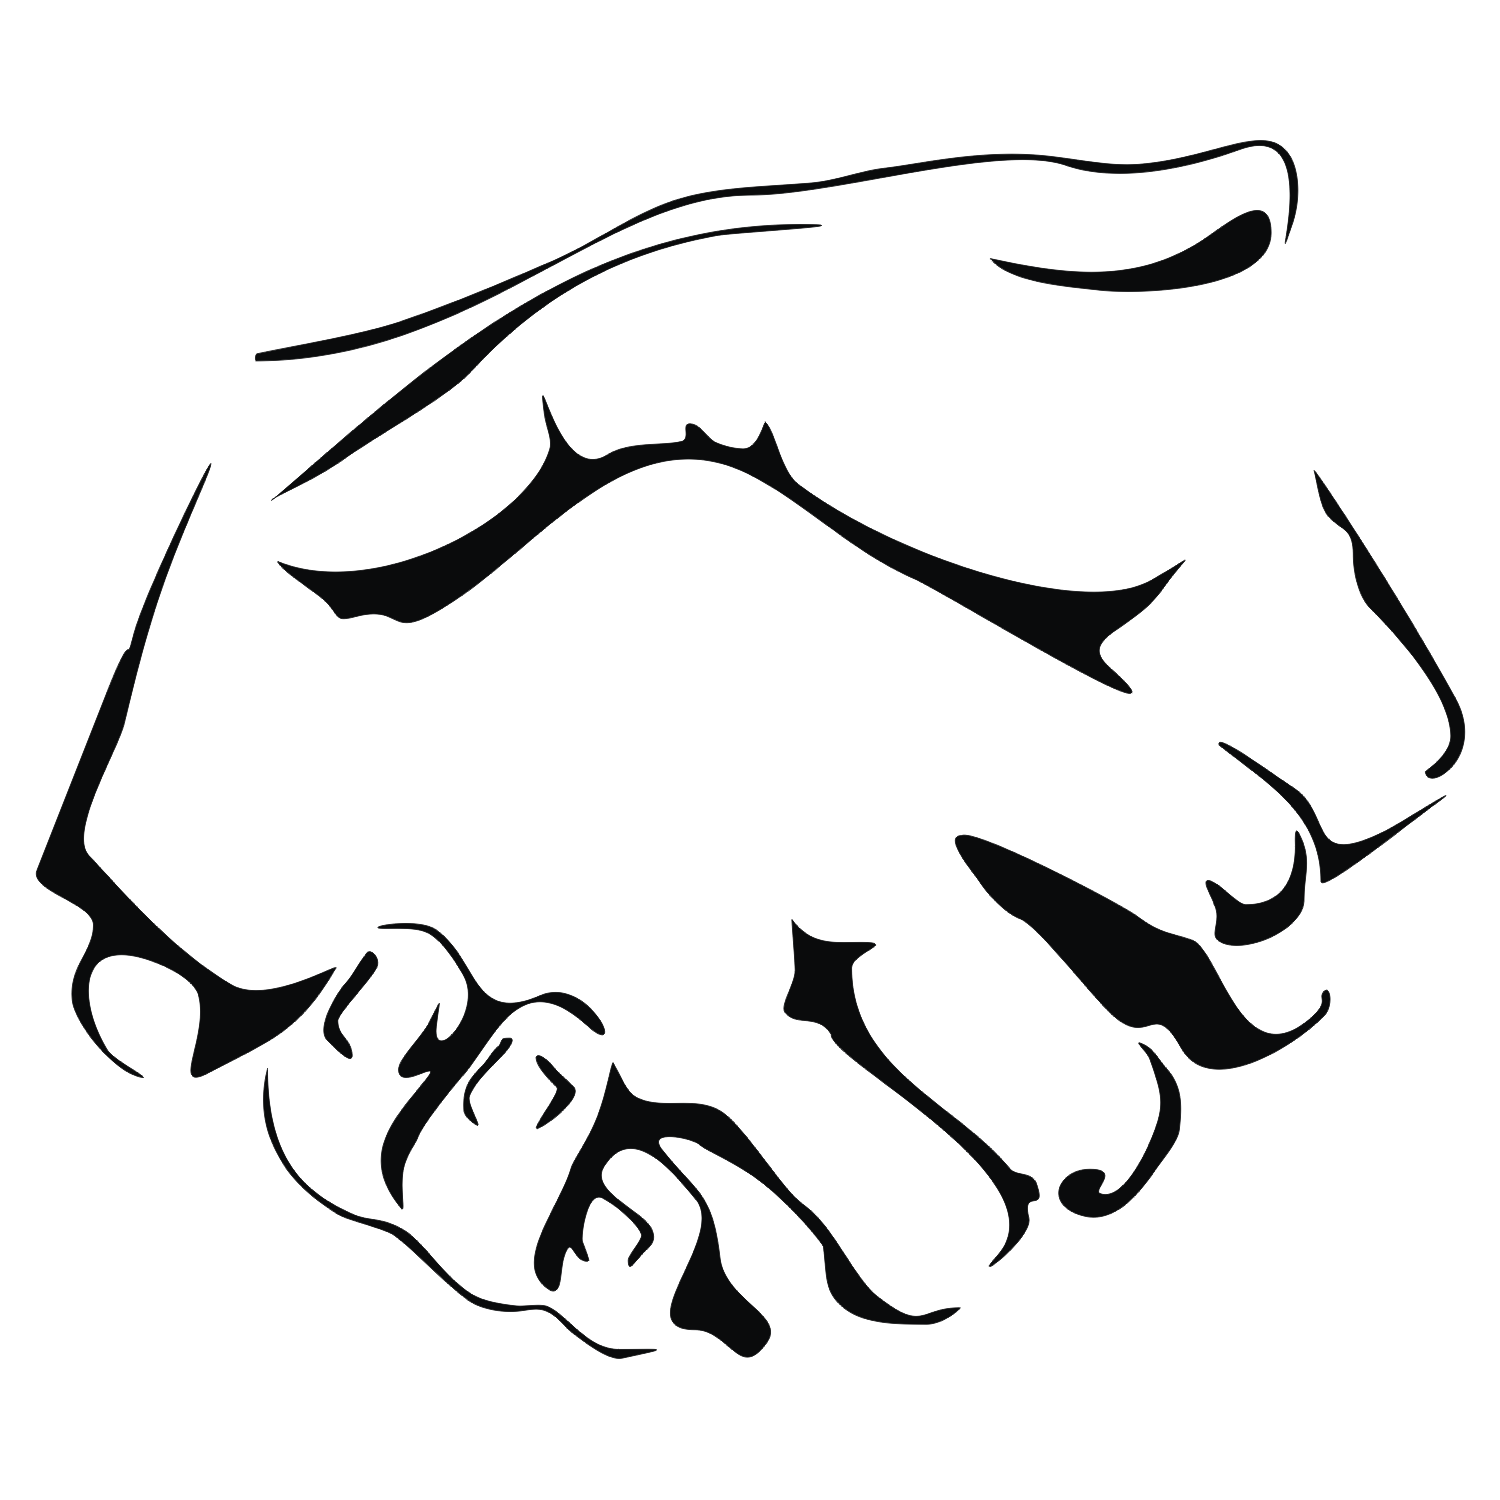 Free Handshake Vector Art